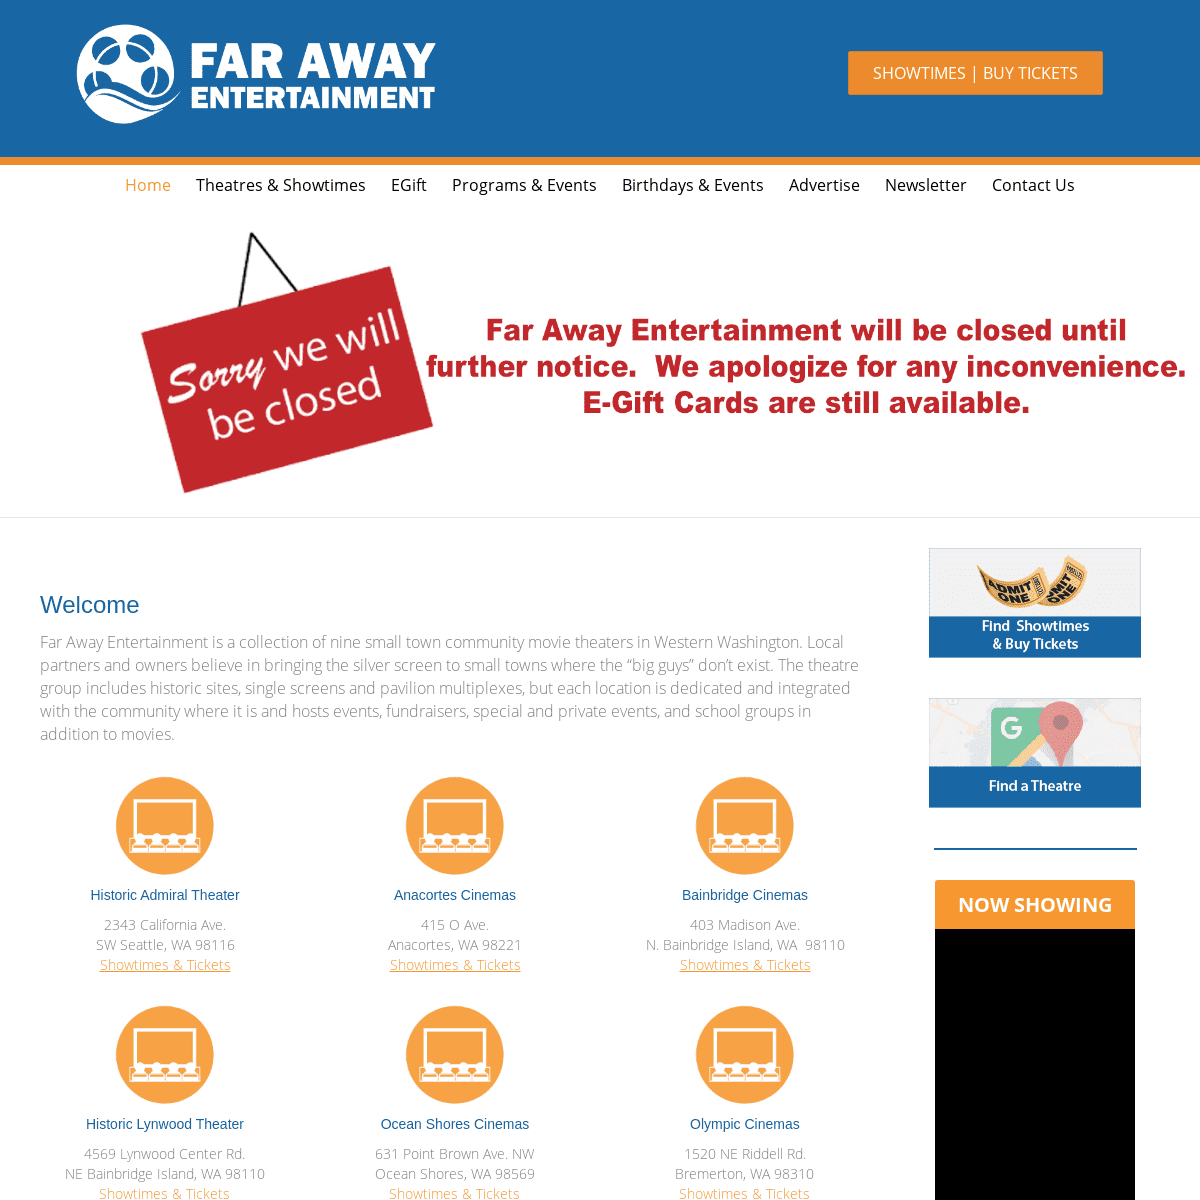 A complete backup of farawayentertainment.com